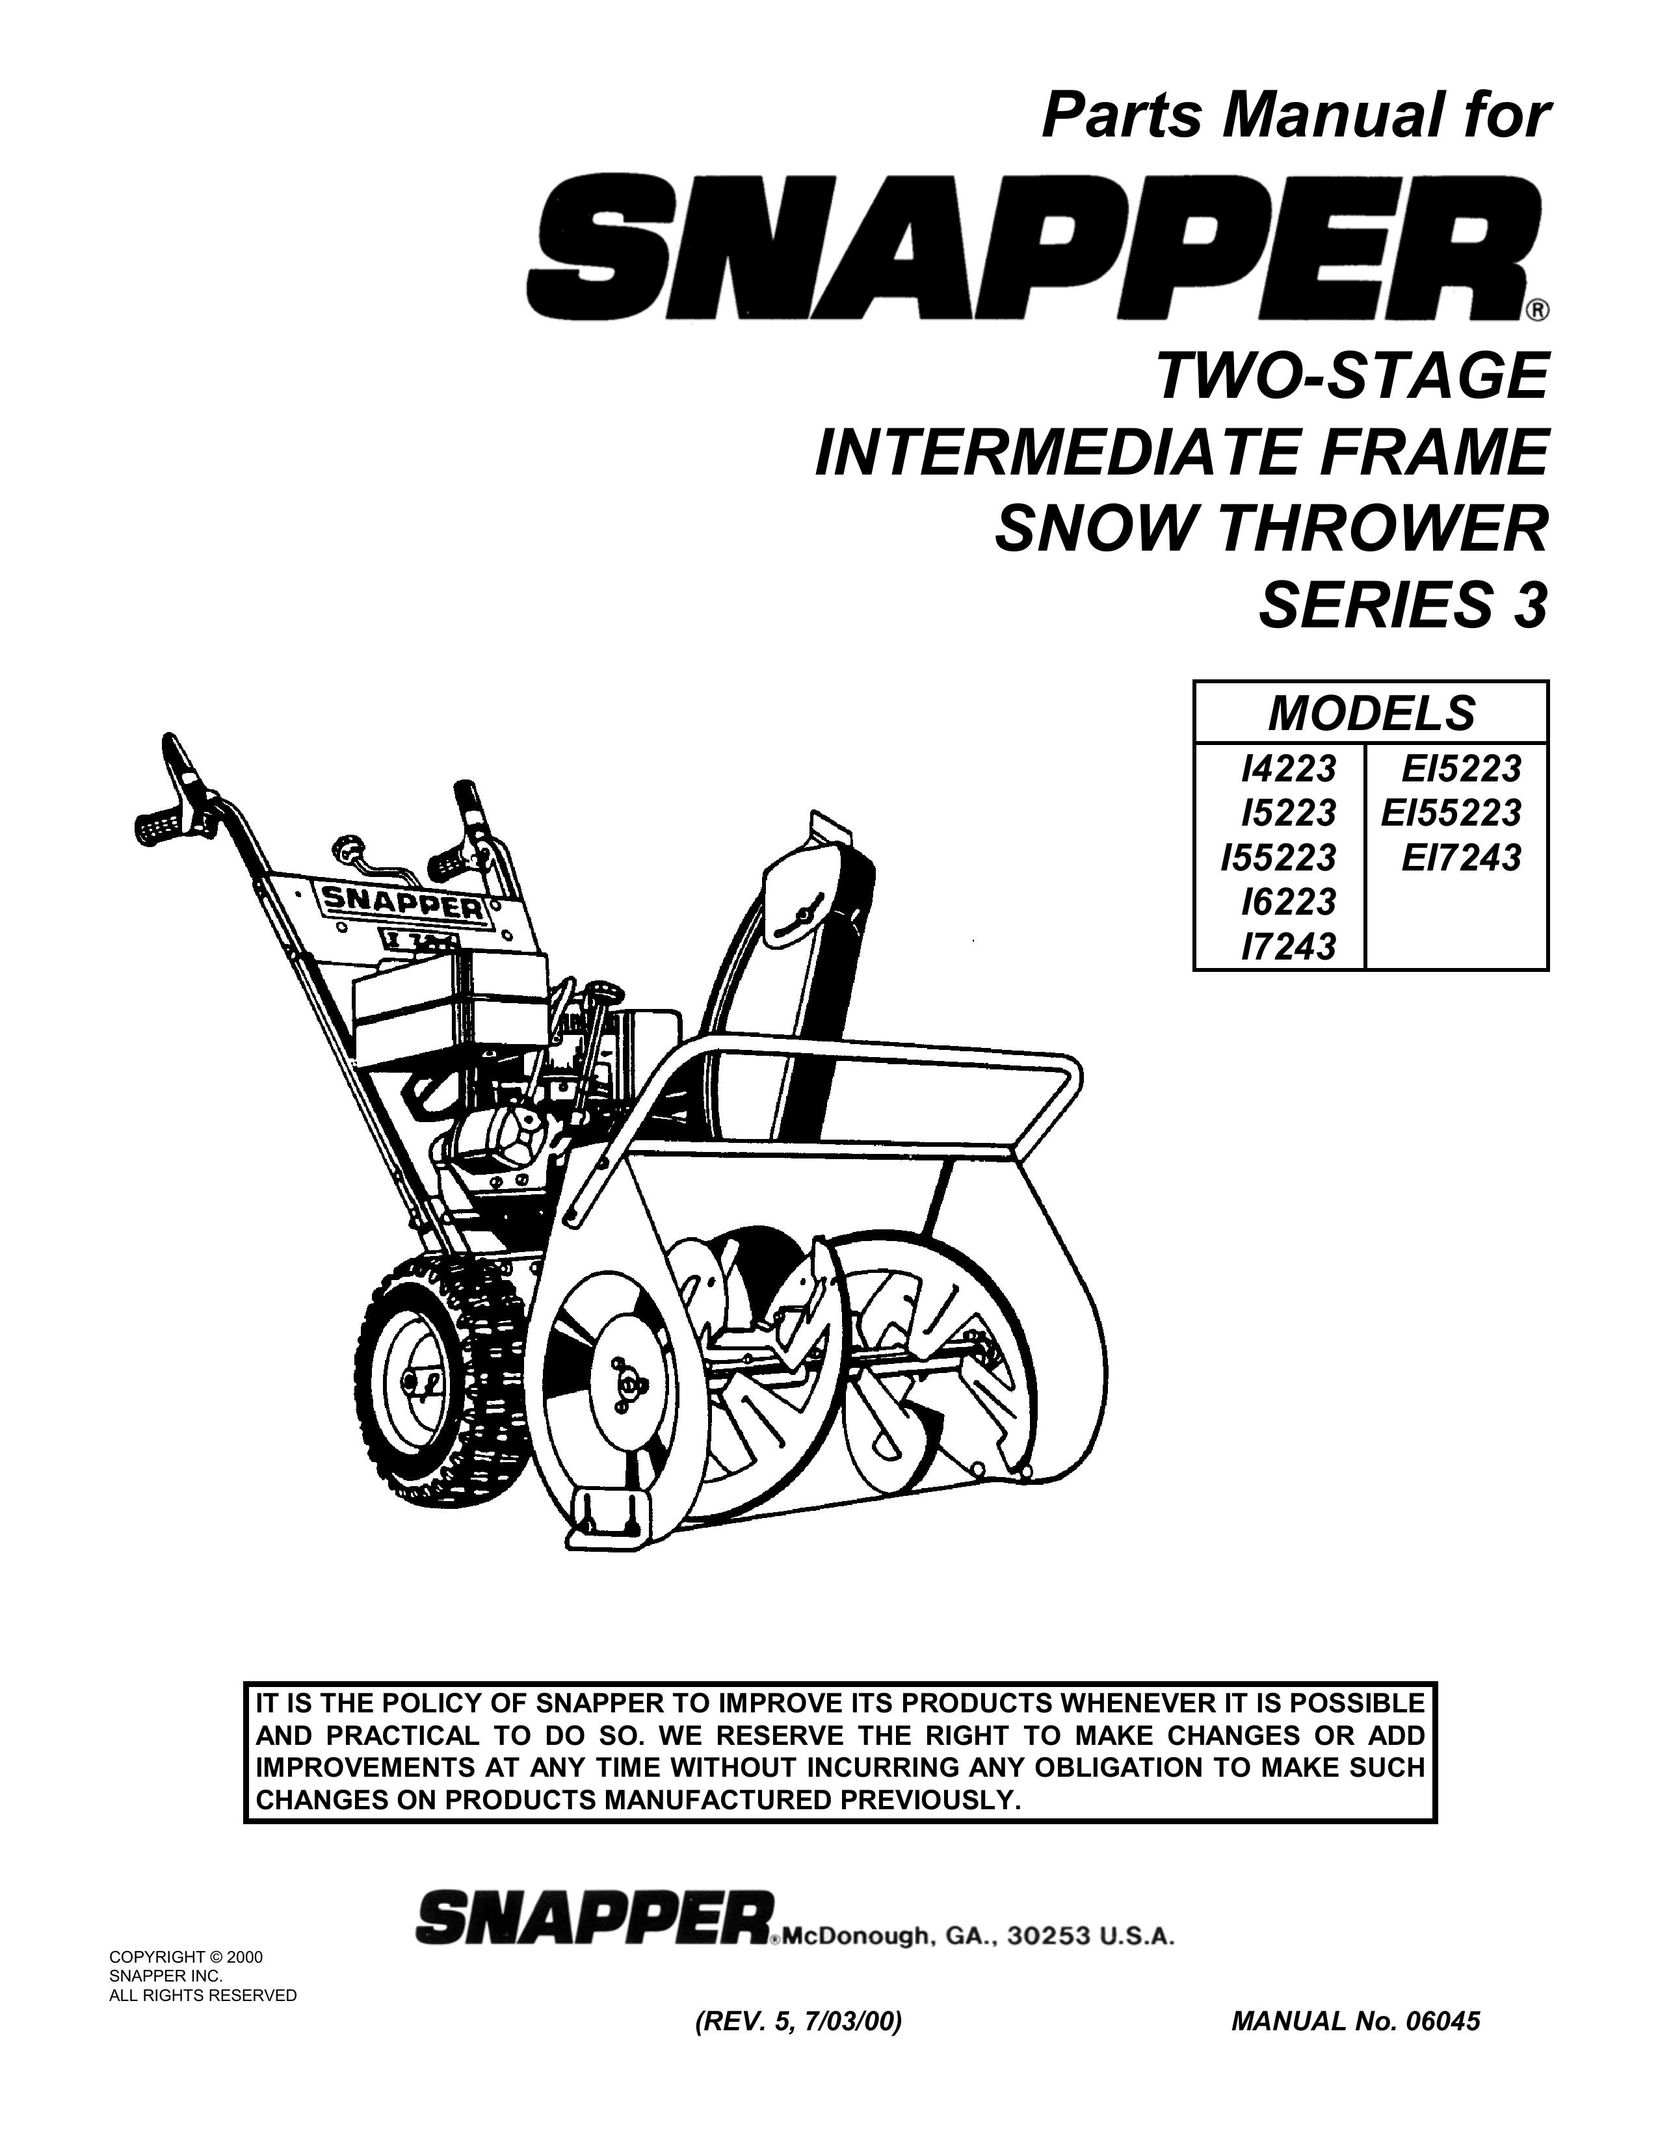 Snapper EI7243 Computer Monitor User Manual